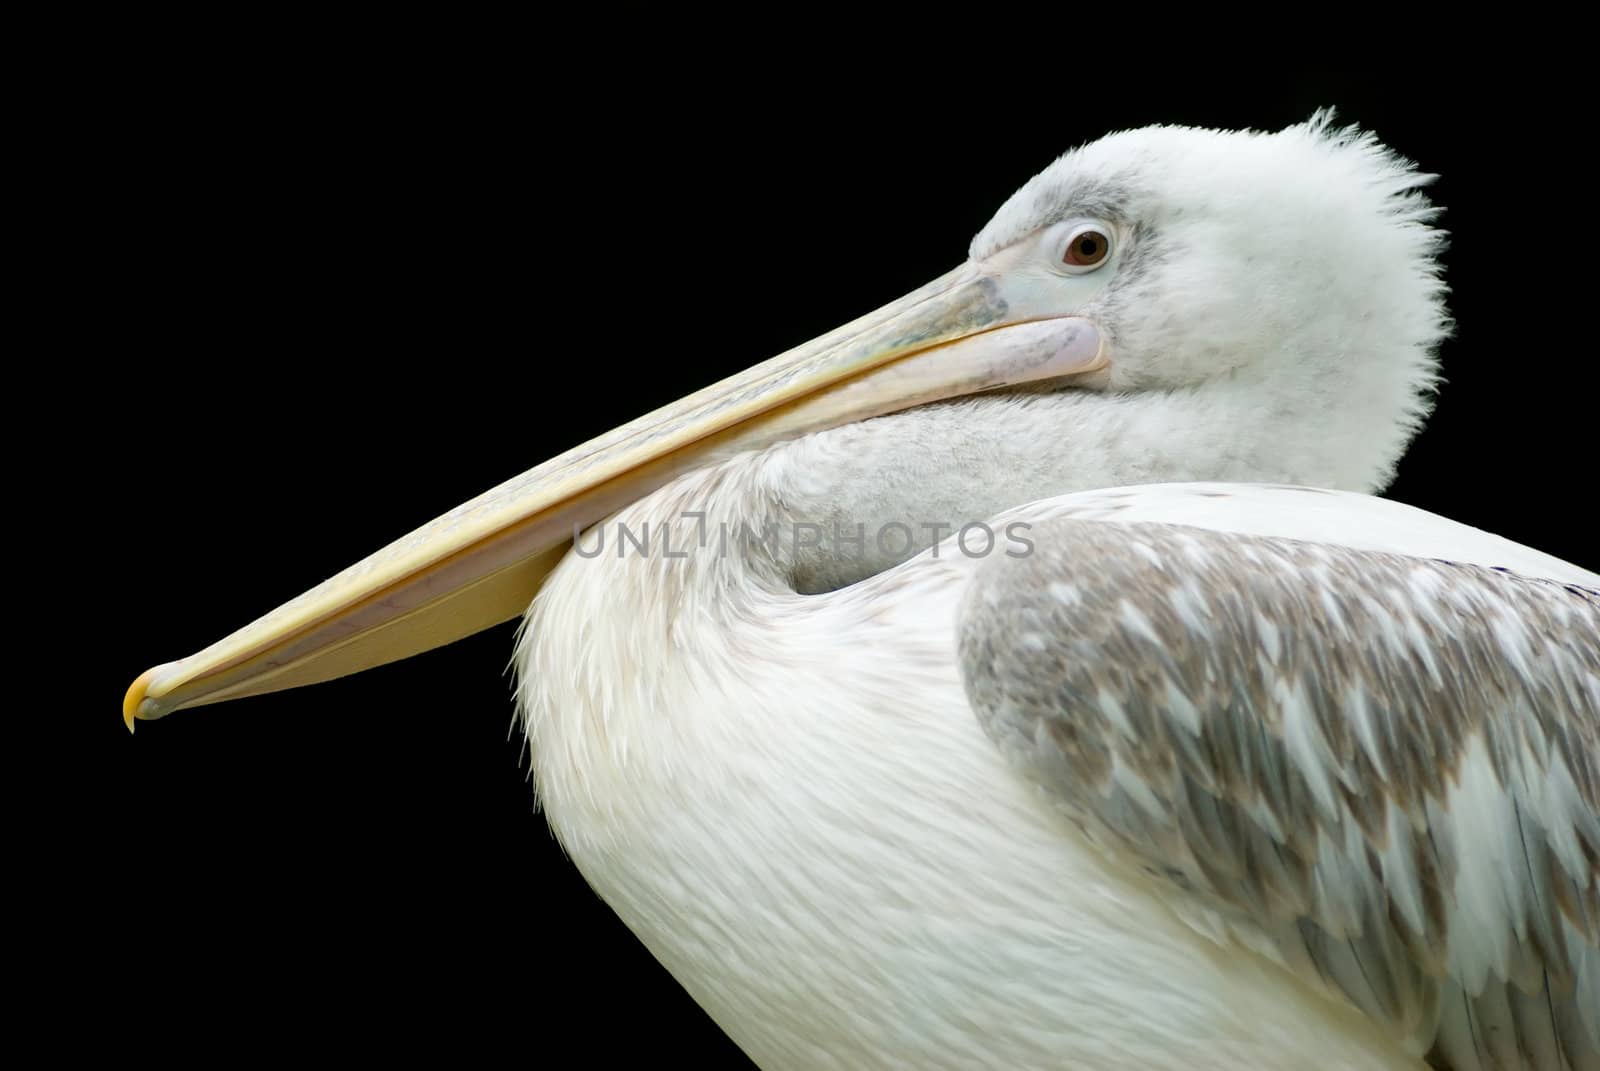 Restful pelican folding its long neck into a elegant S-shape